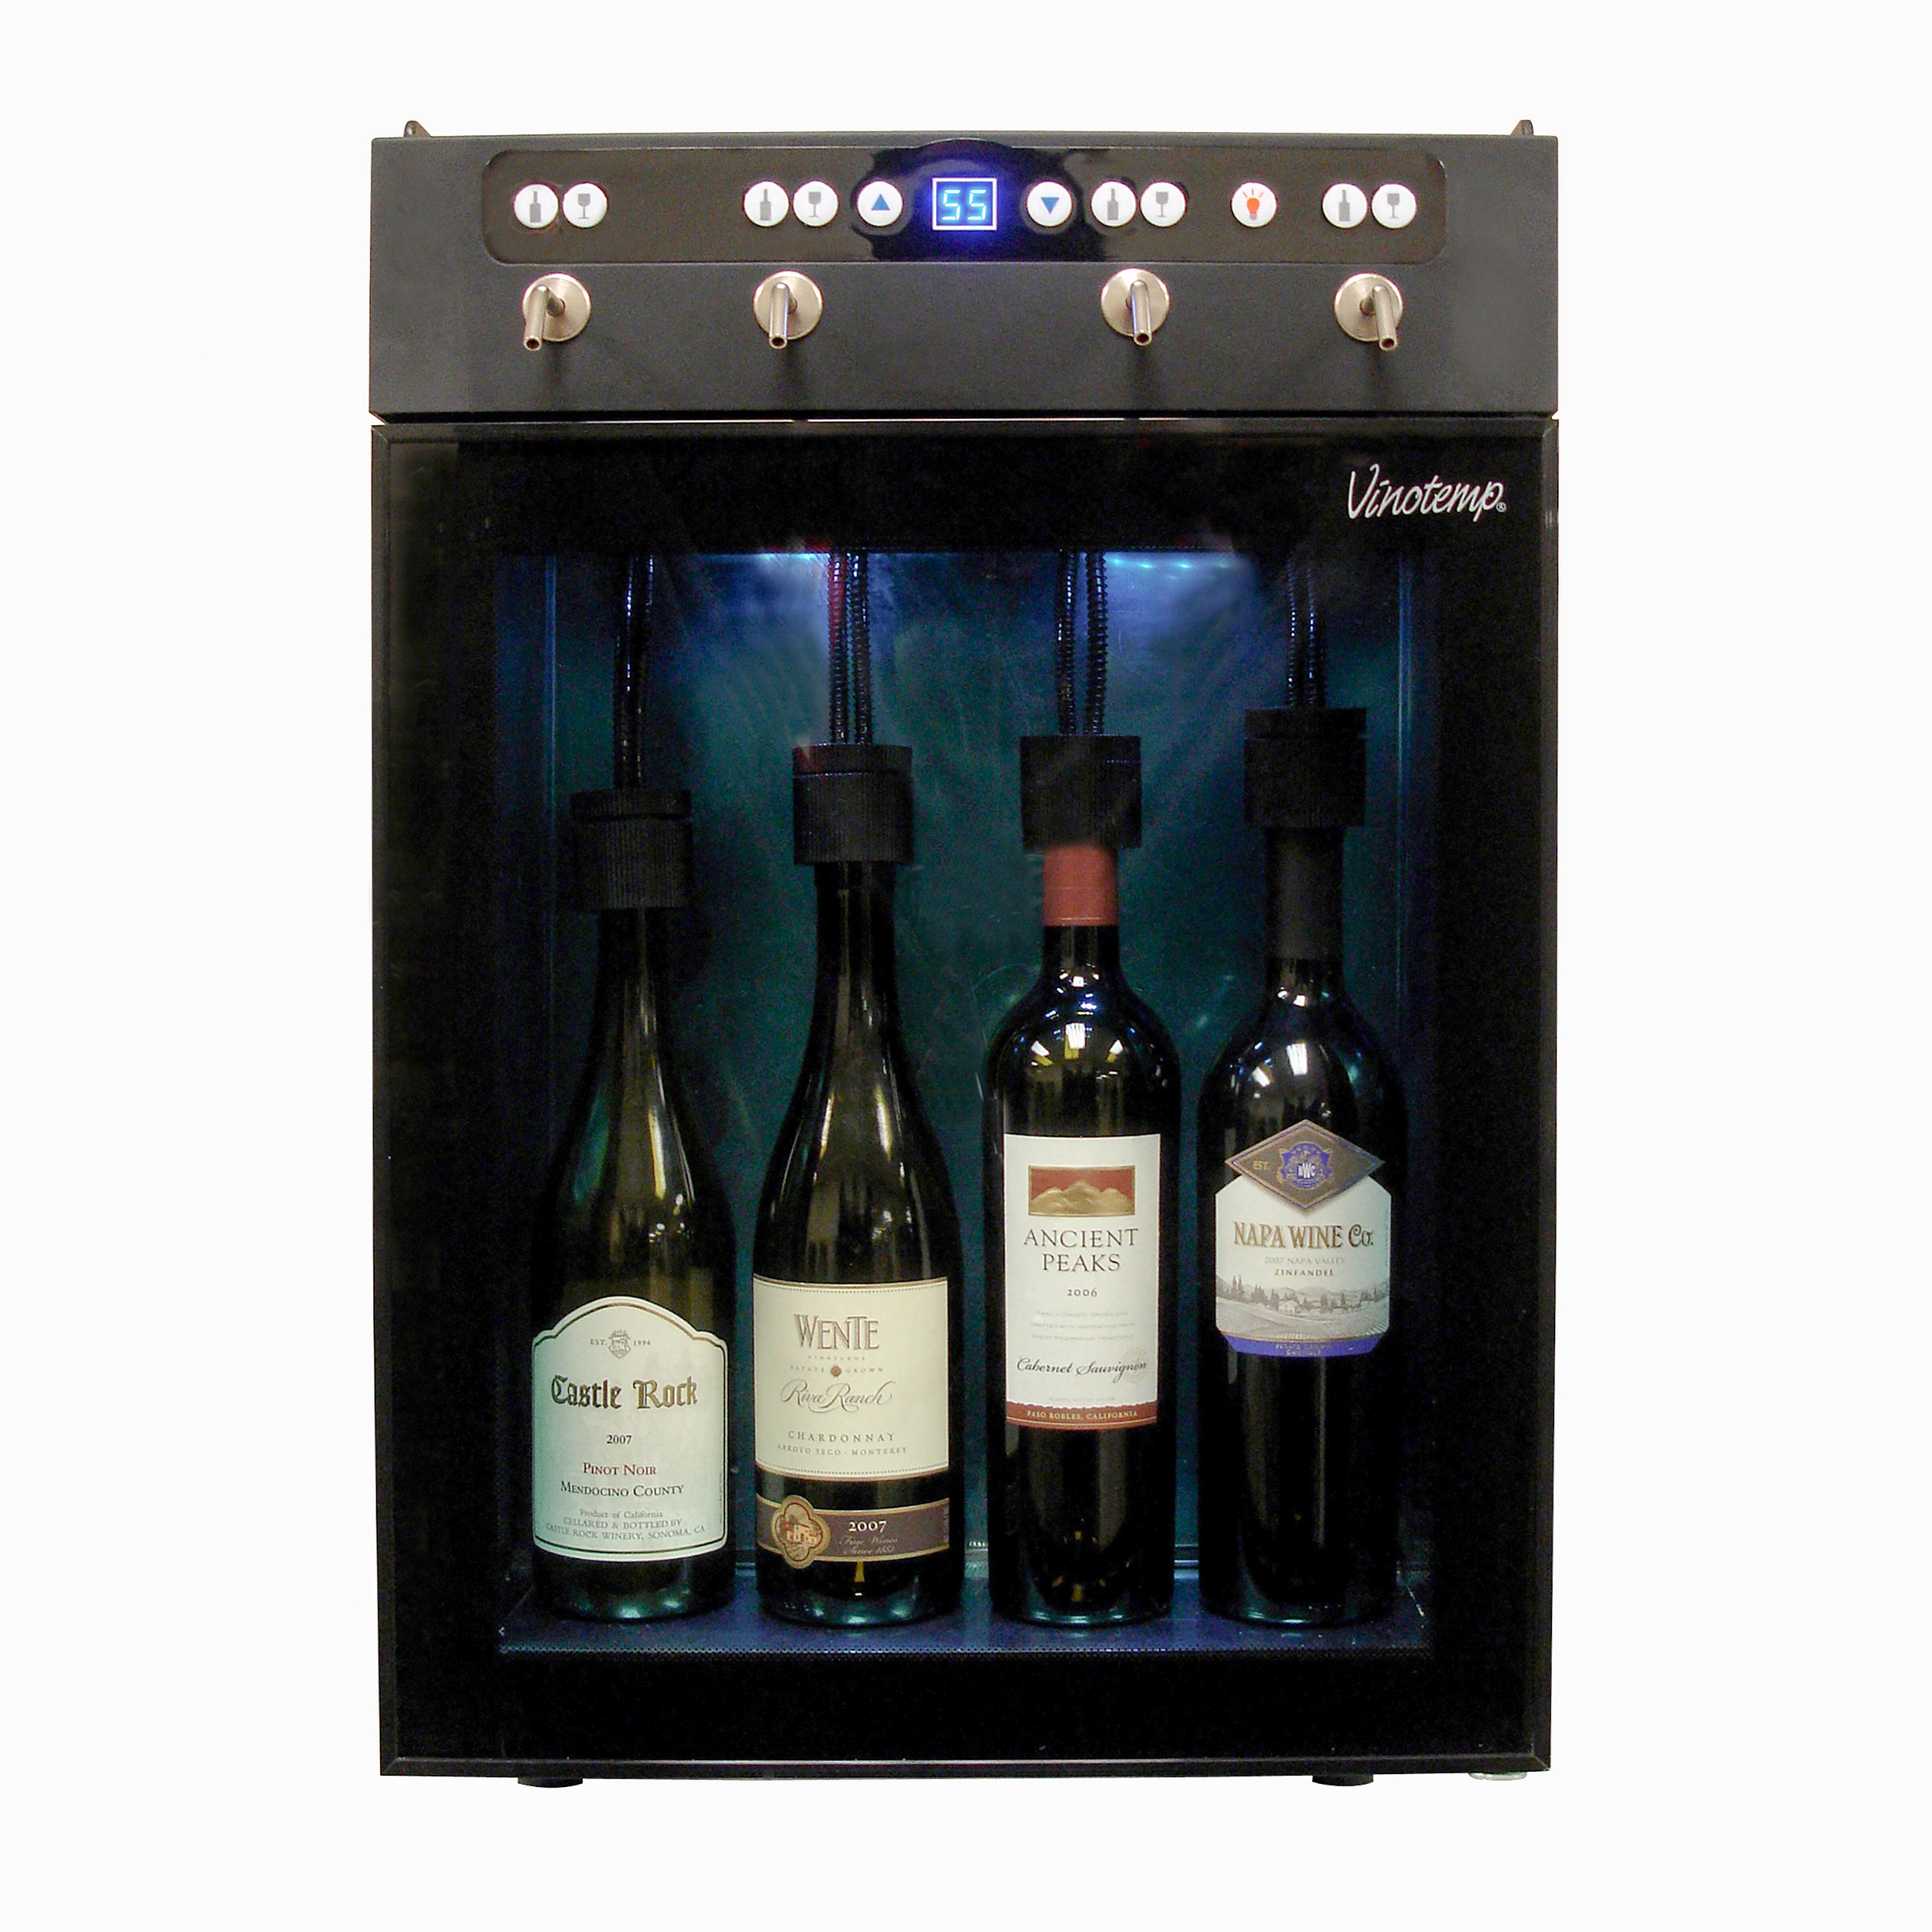 Vinotemp - VT-WINEDISP4, Vinotemp Wine Dispenser with Push Button Controls, 4 Bottle Capacity, in Black